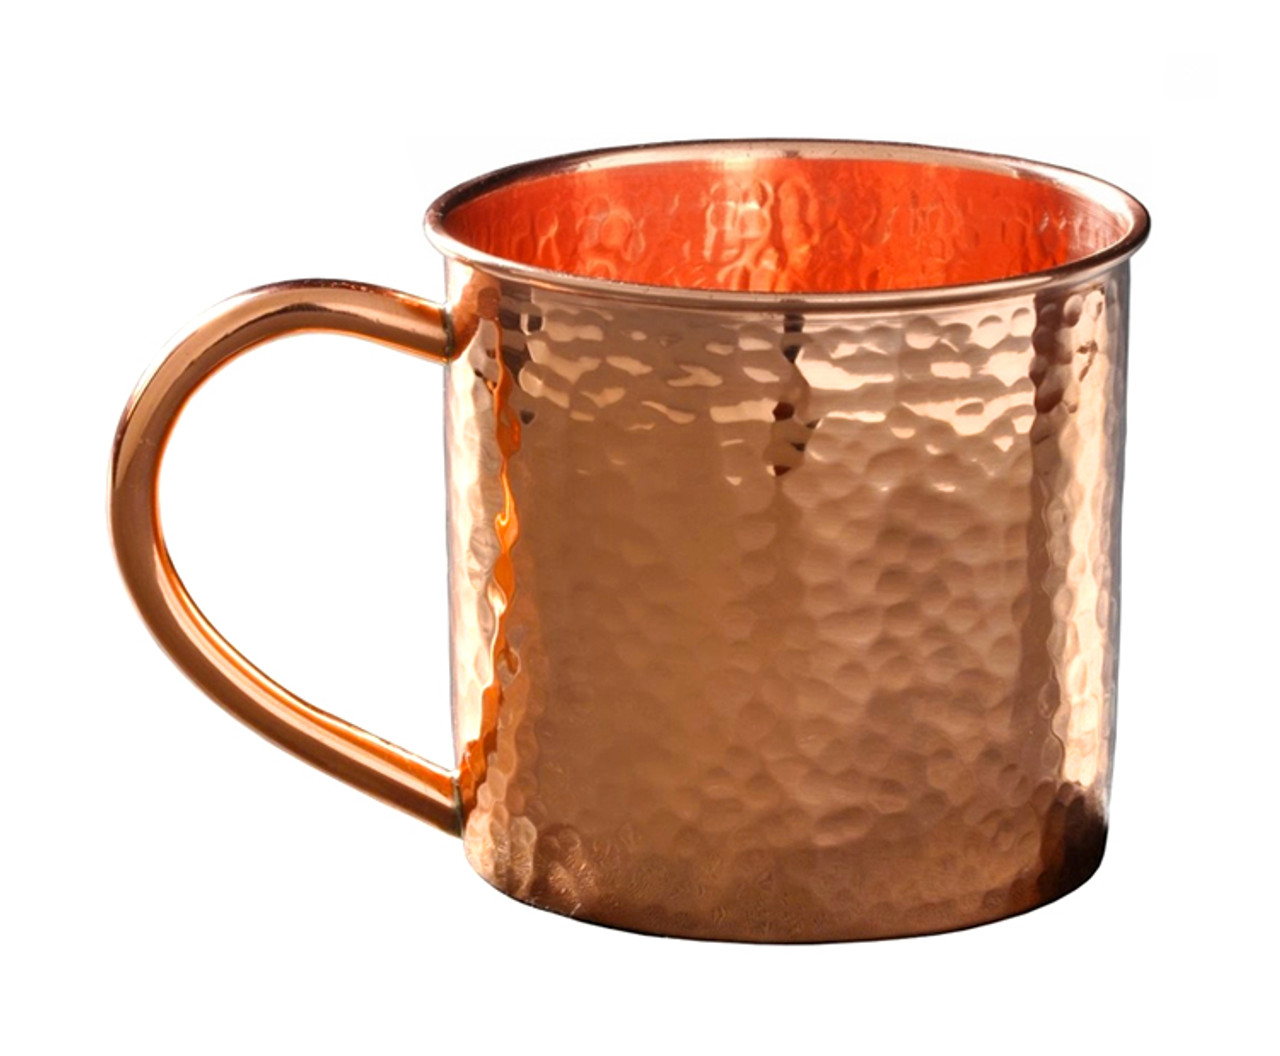 Hammered Copper Mule Mug 16oz with Rounded Handle, The Barrel, Copper Mug  Co.